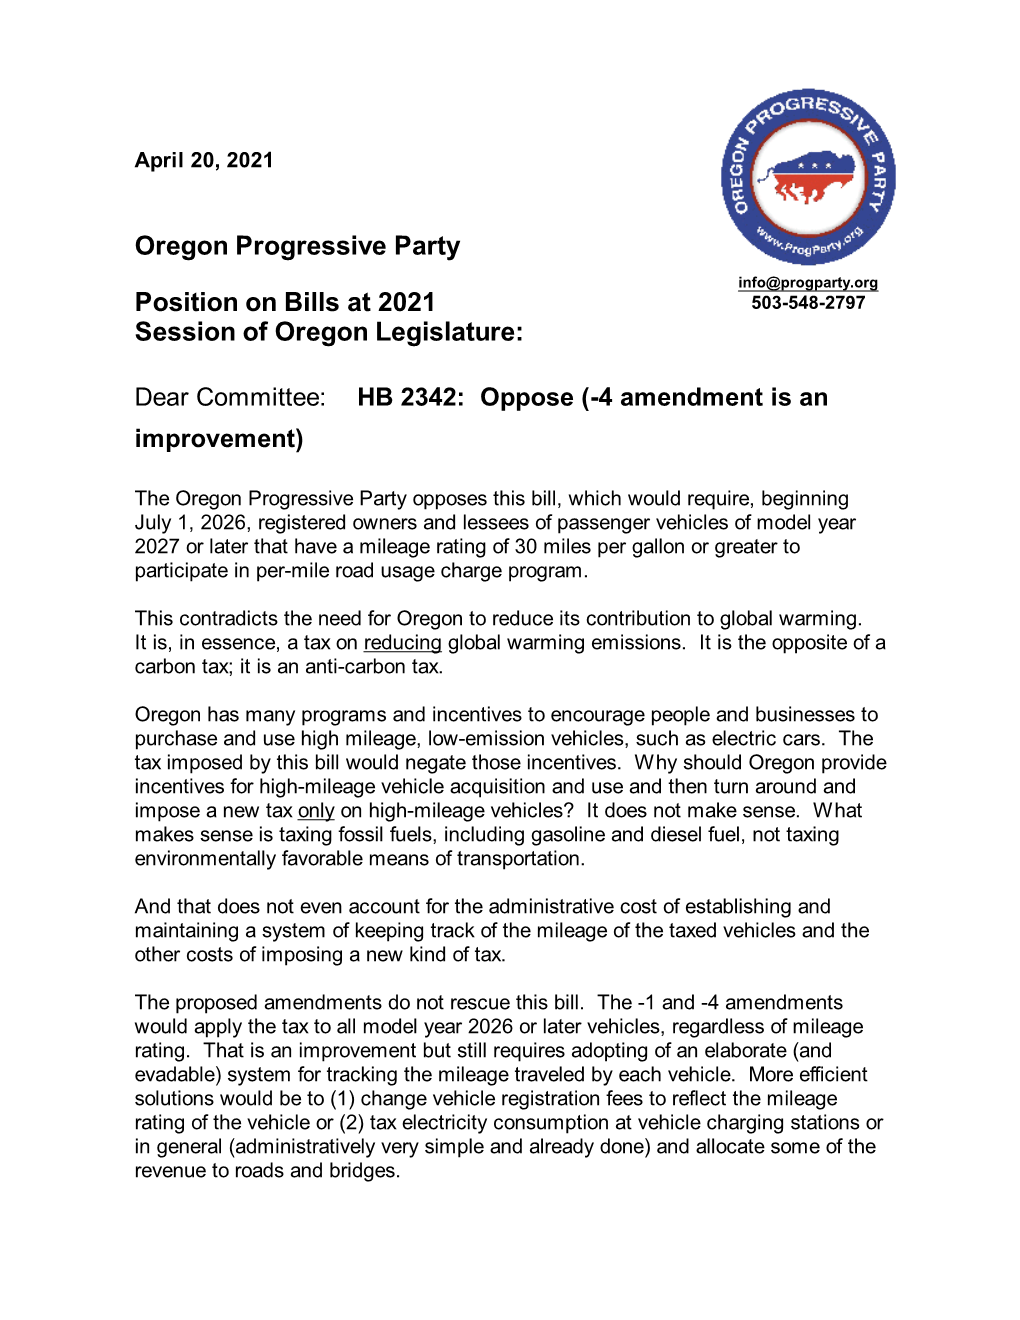 Oregon Progressive Party Position on Bills at 2021 Session of Oregon Legislature